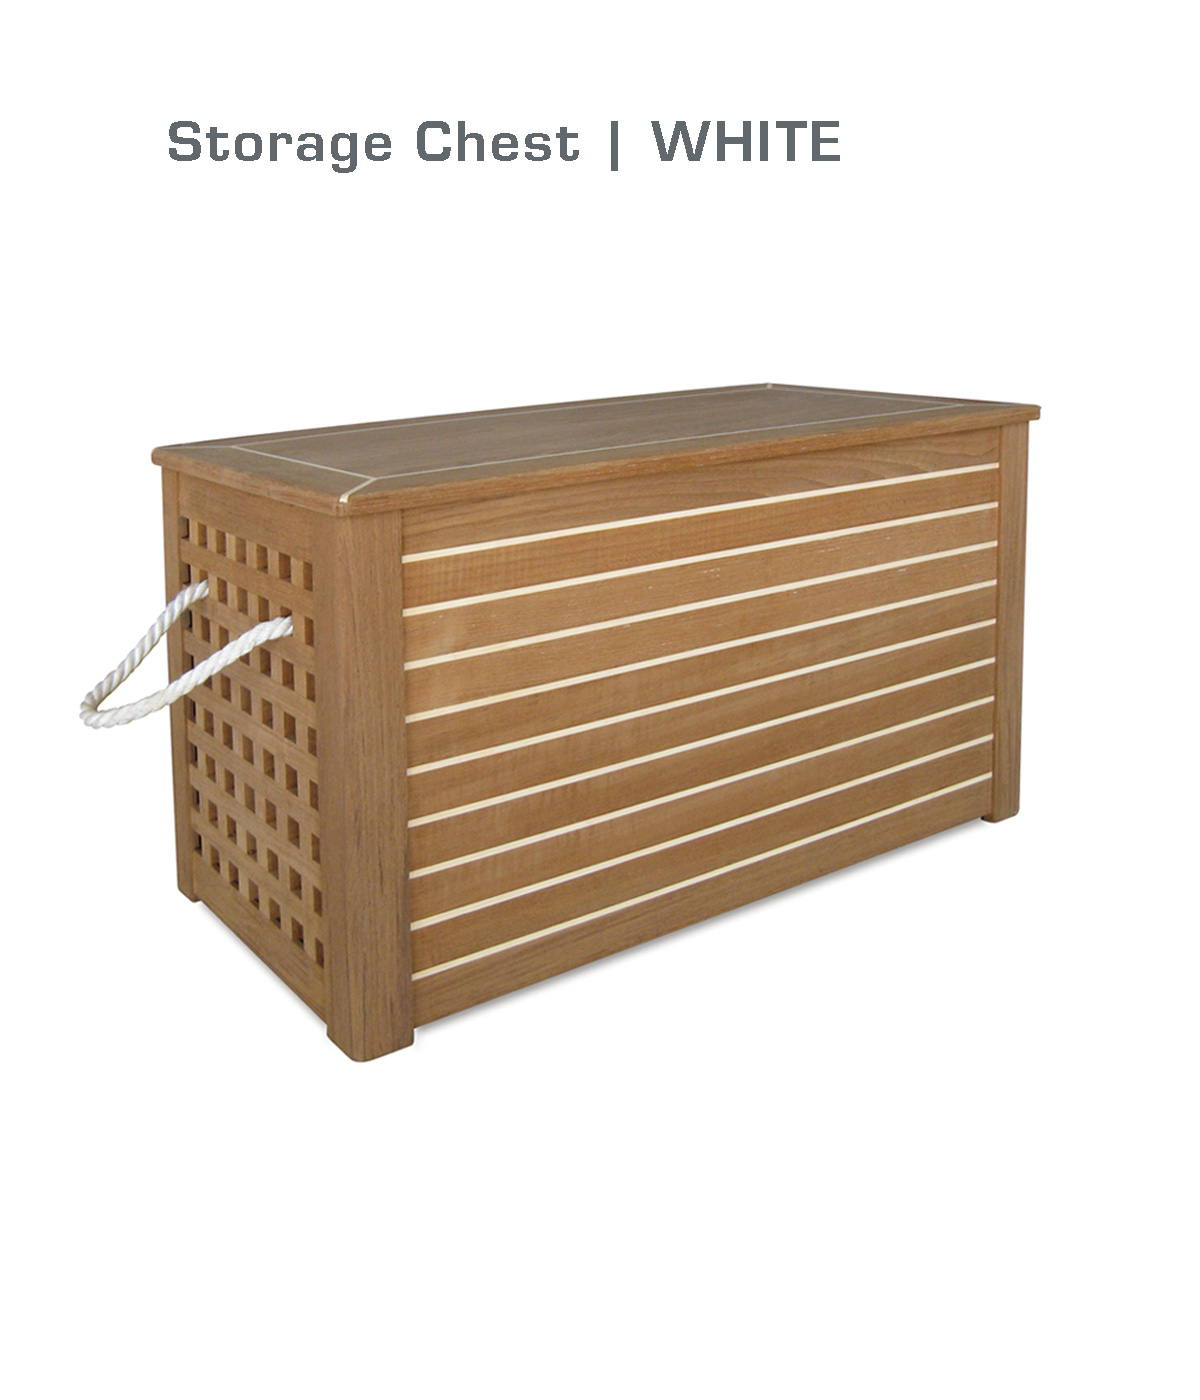 Storage chest | White